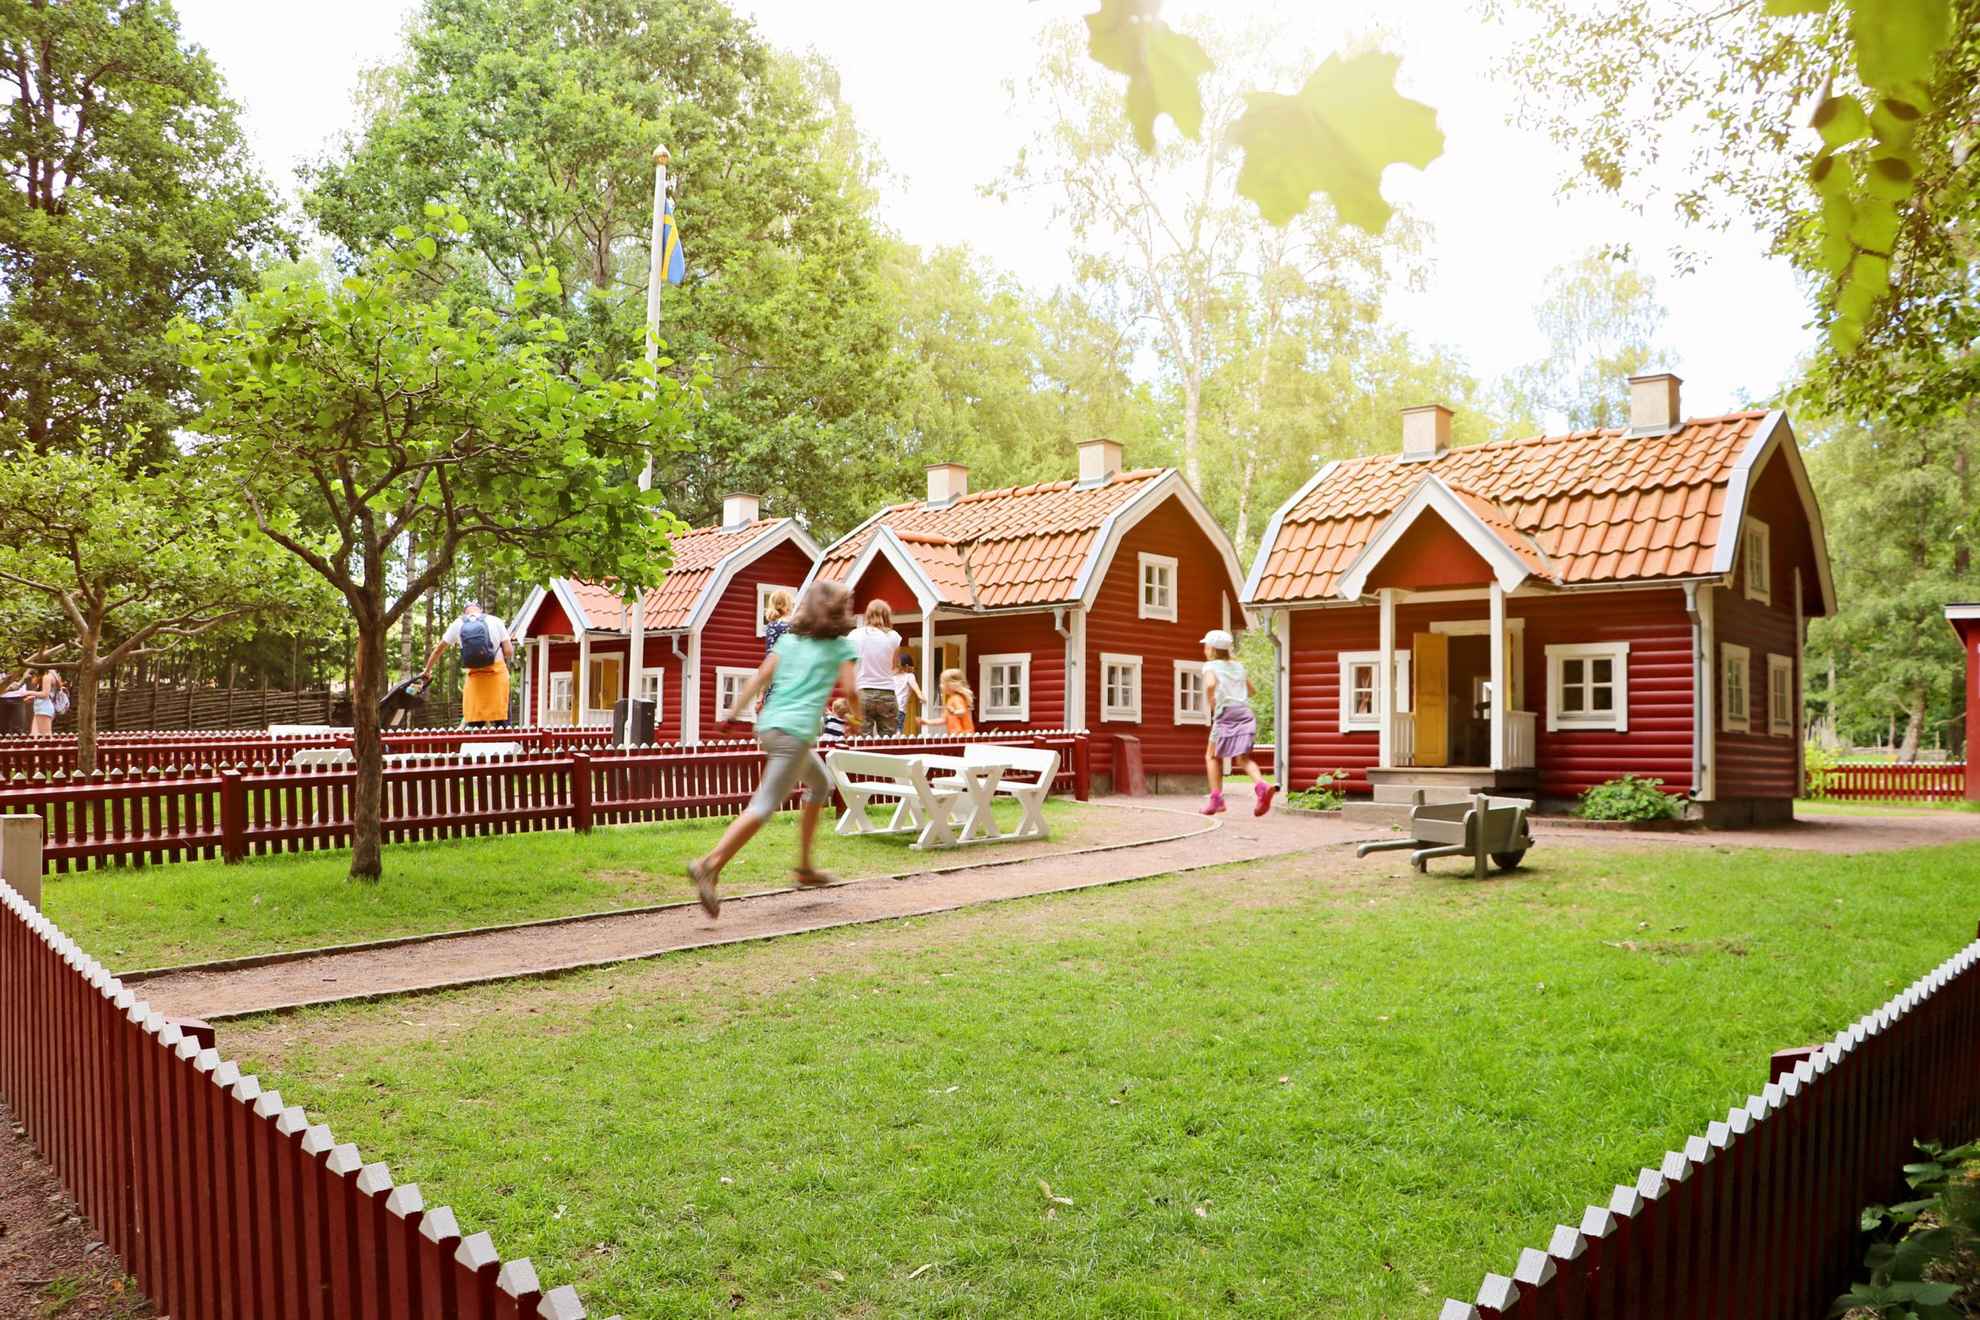 Bullerbyn at Astrid Lindgrens World in Småland